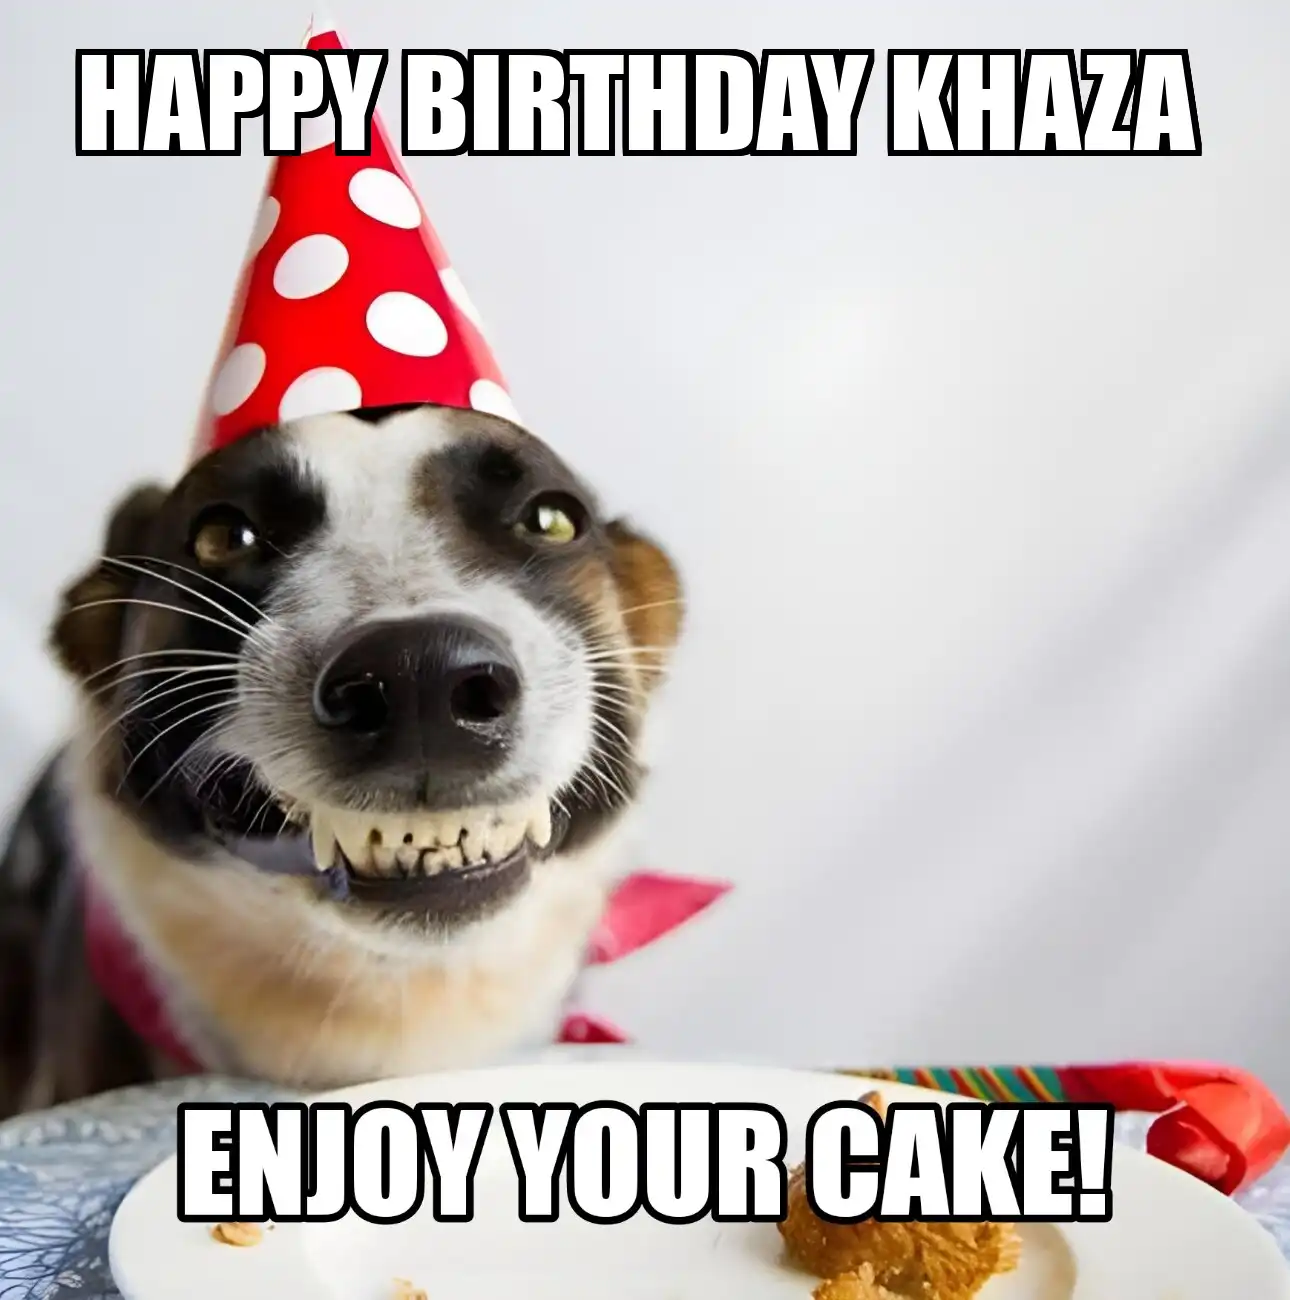 Happy Birthday Khaza Enjoy Your Cake Dog Meme